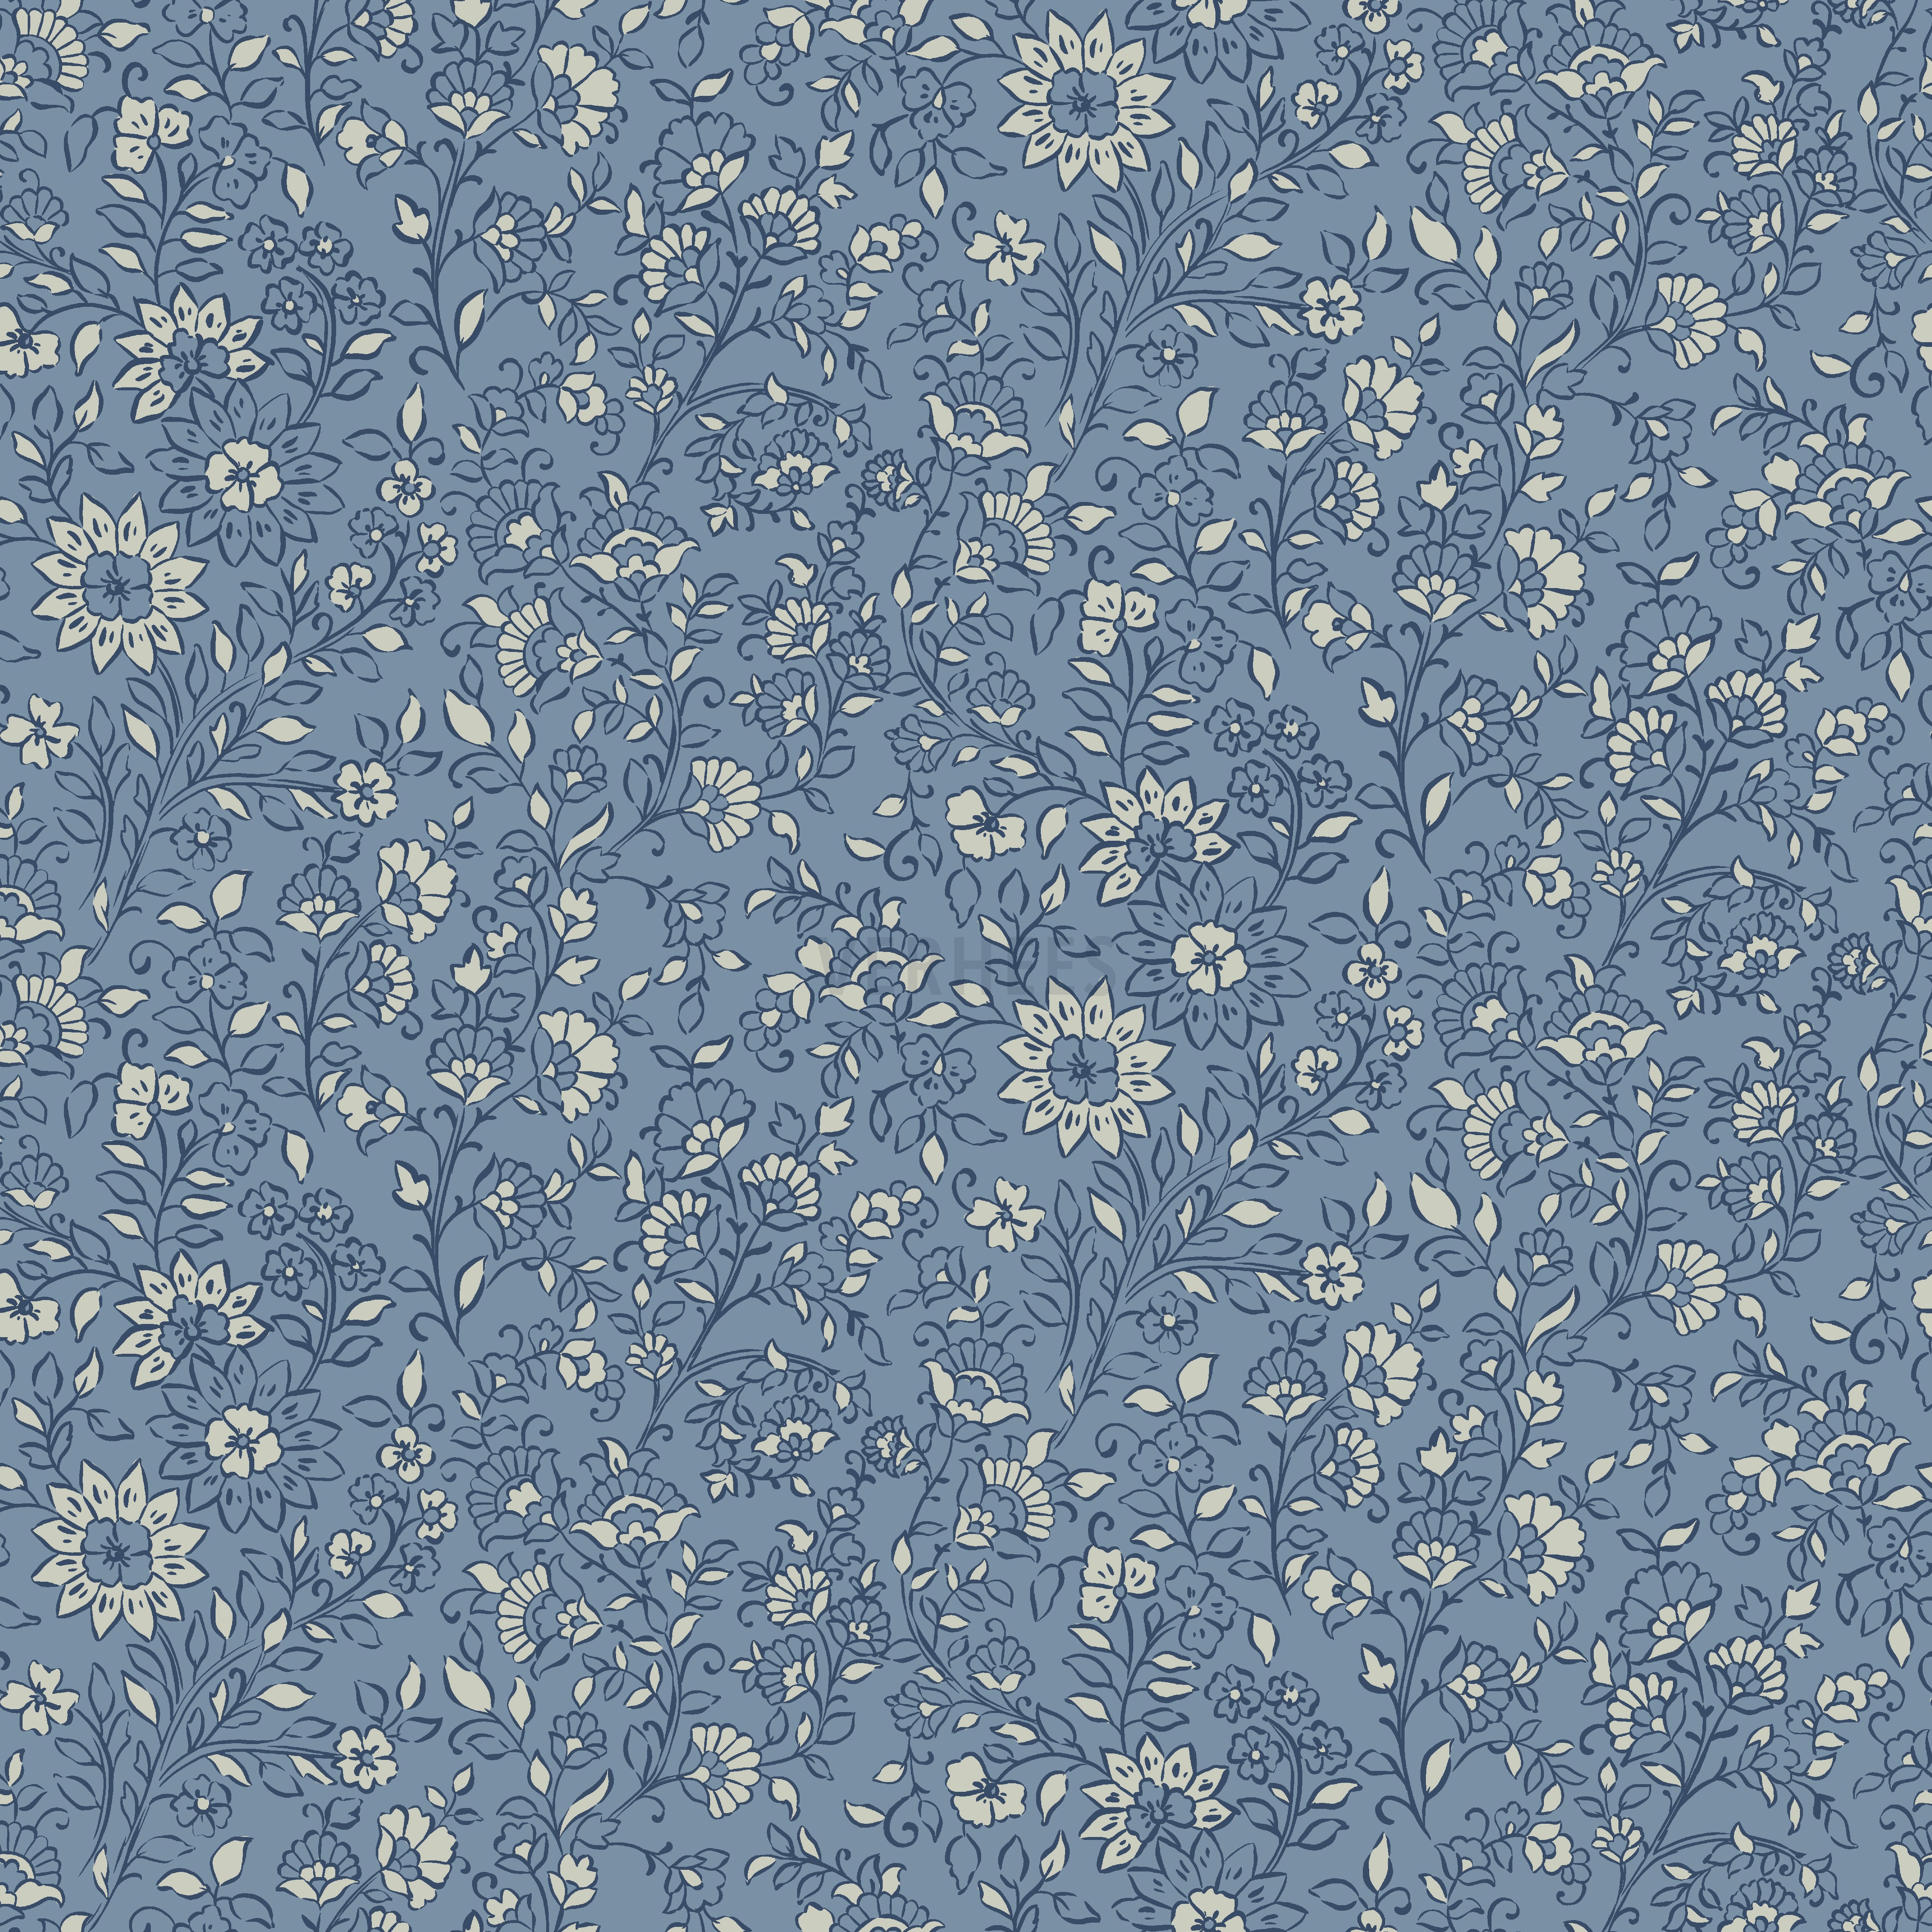 JERSEY FLOWERS BLUE SHADOW (high resolution)